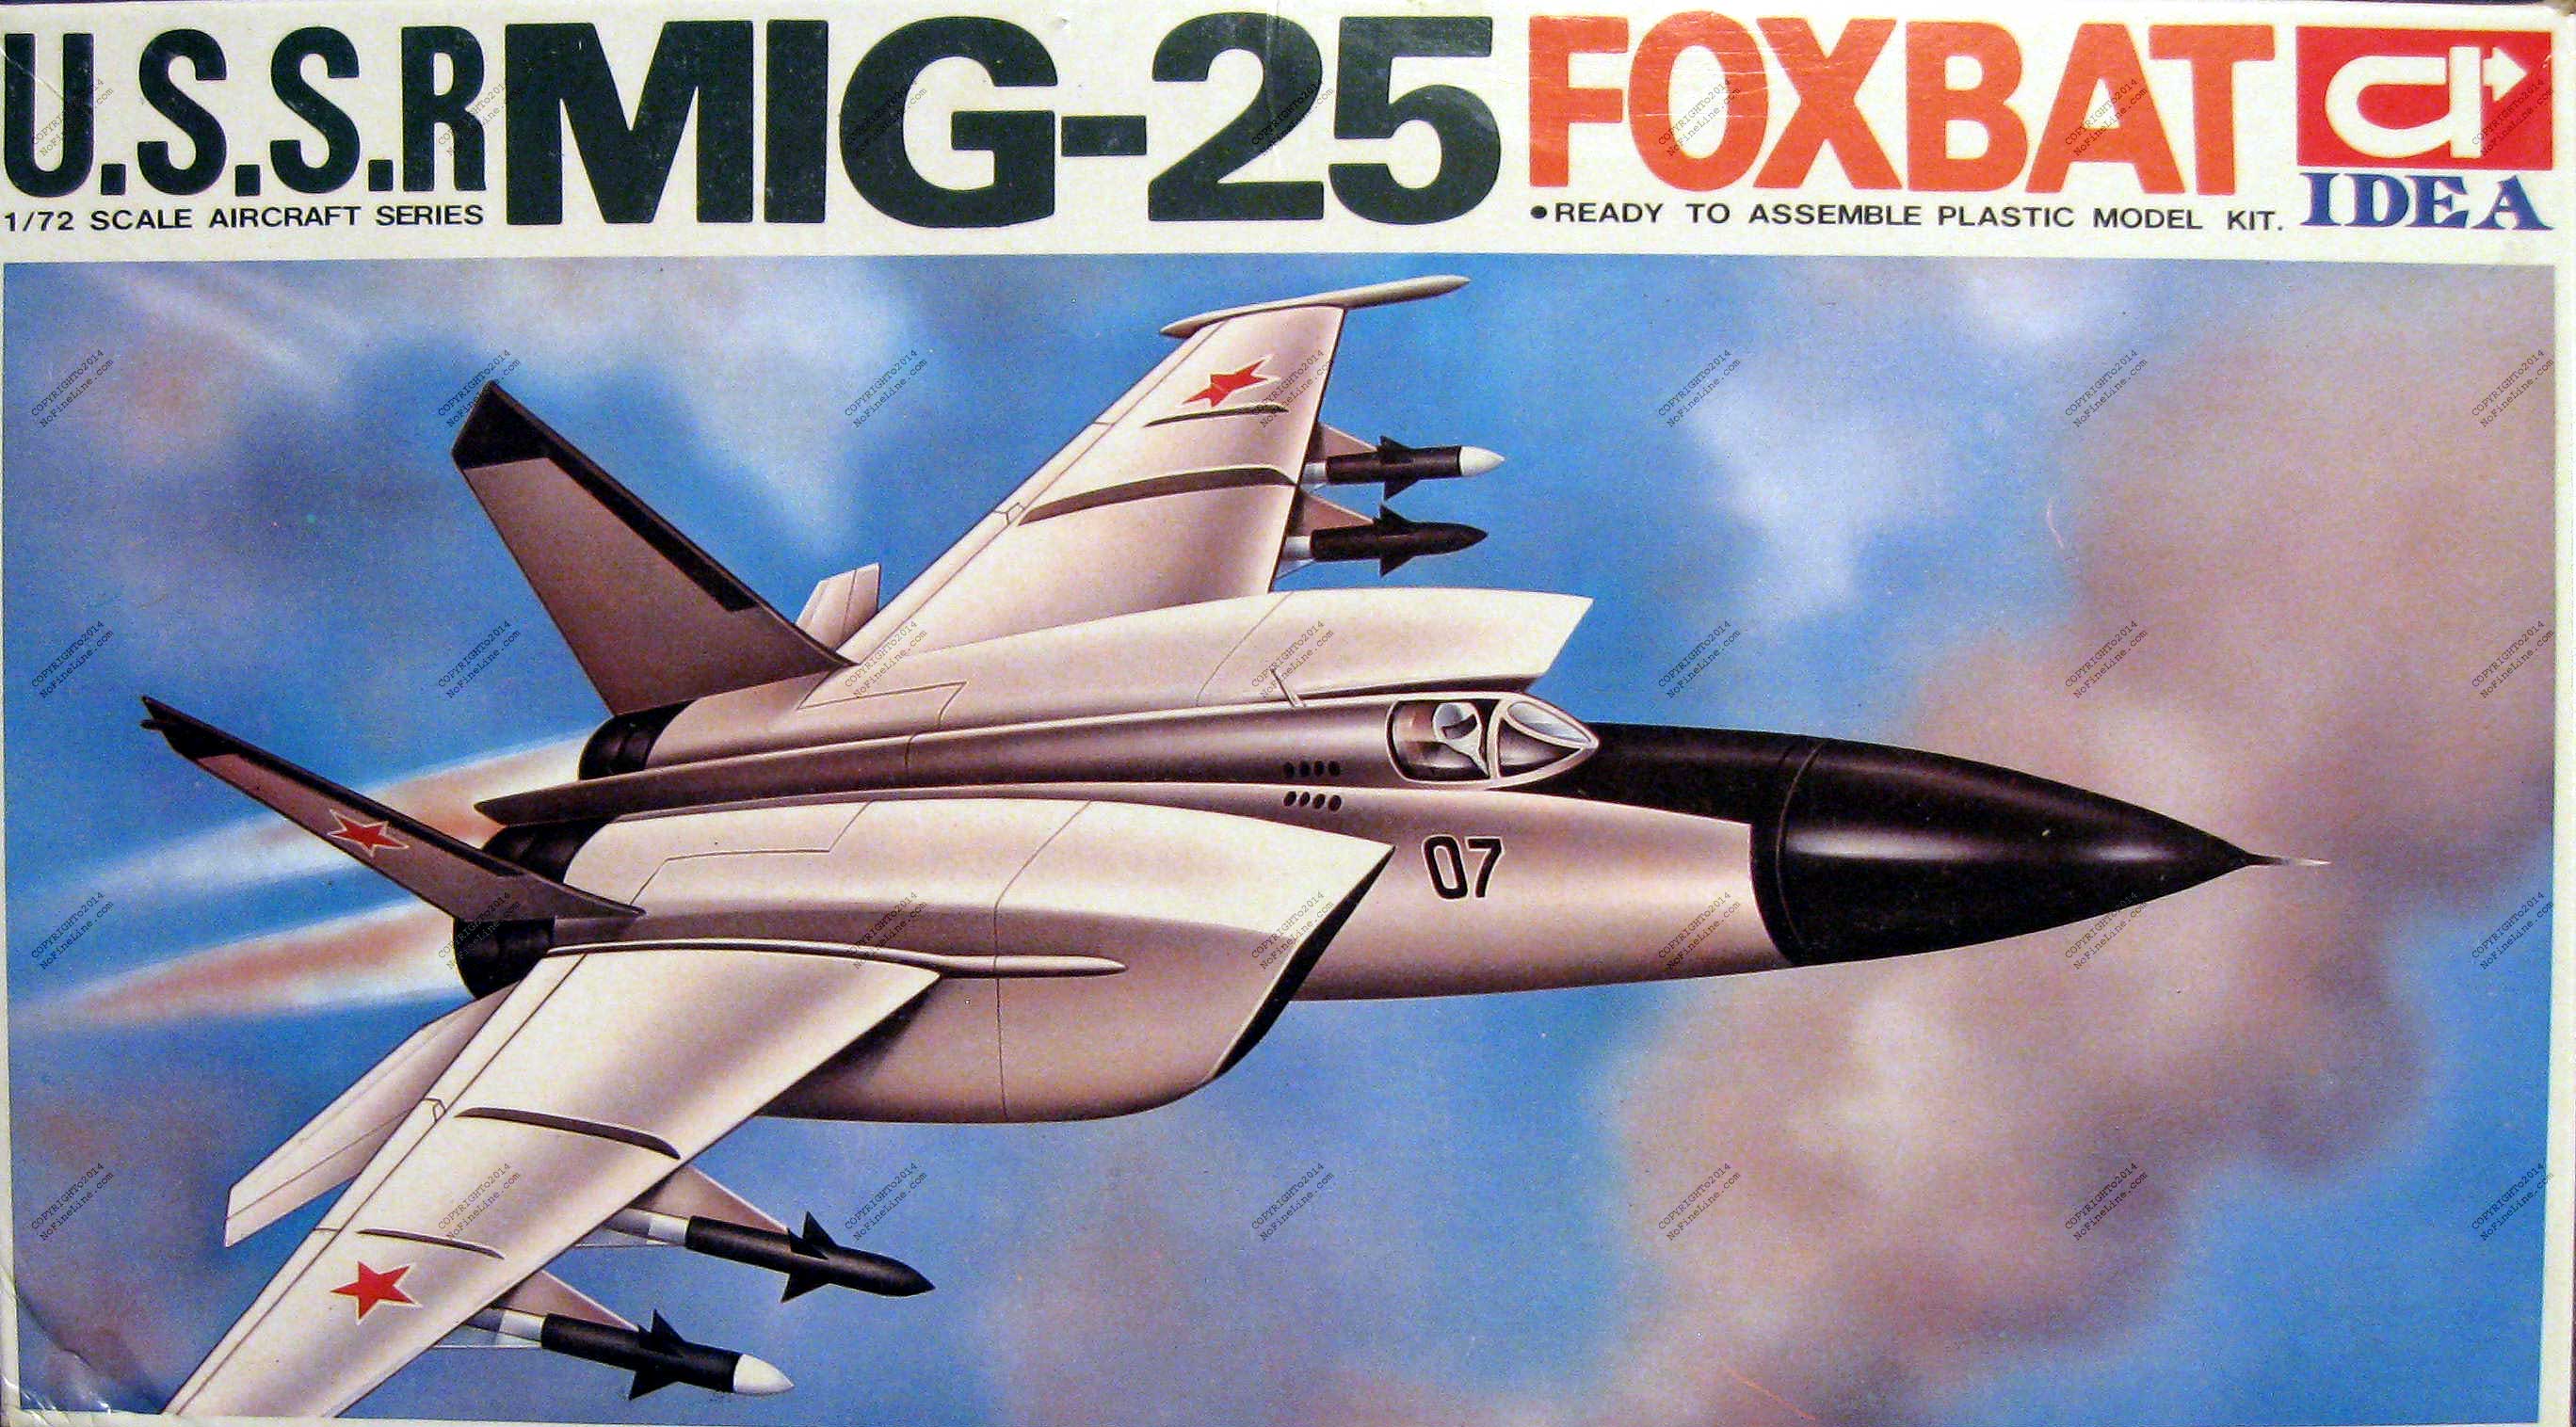 U.S.S.R. MiG-25 FOXBAT